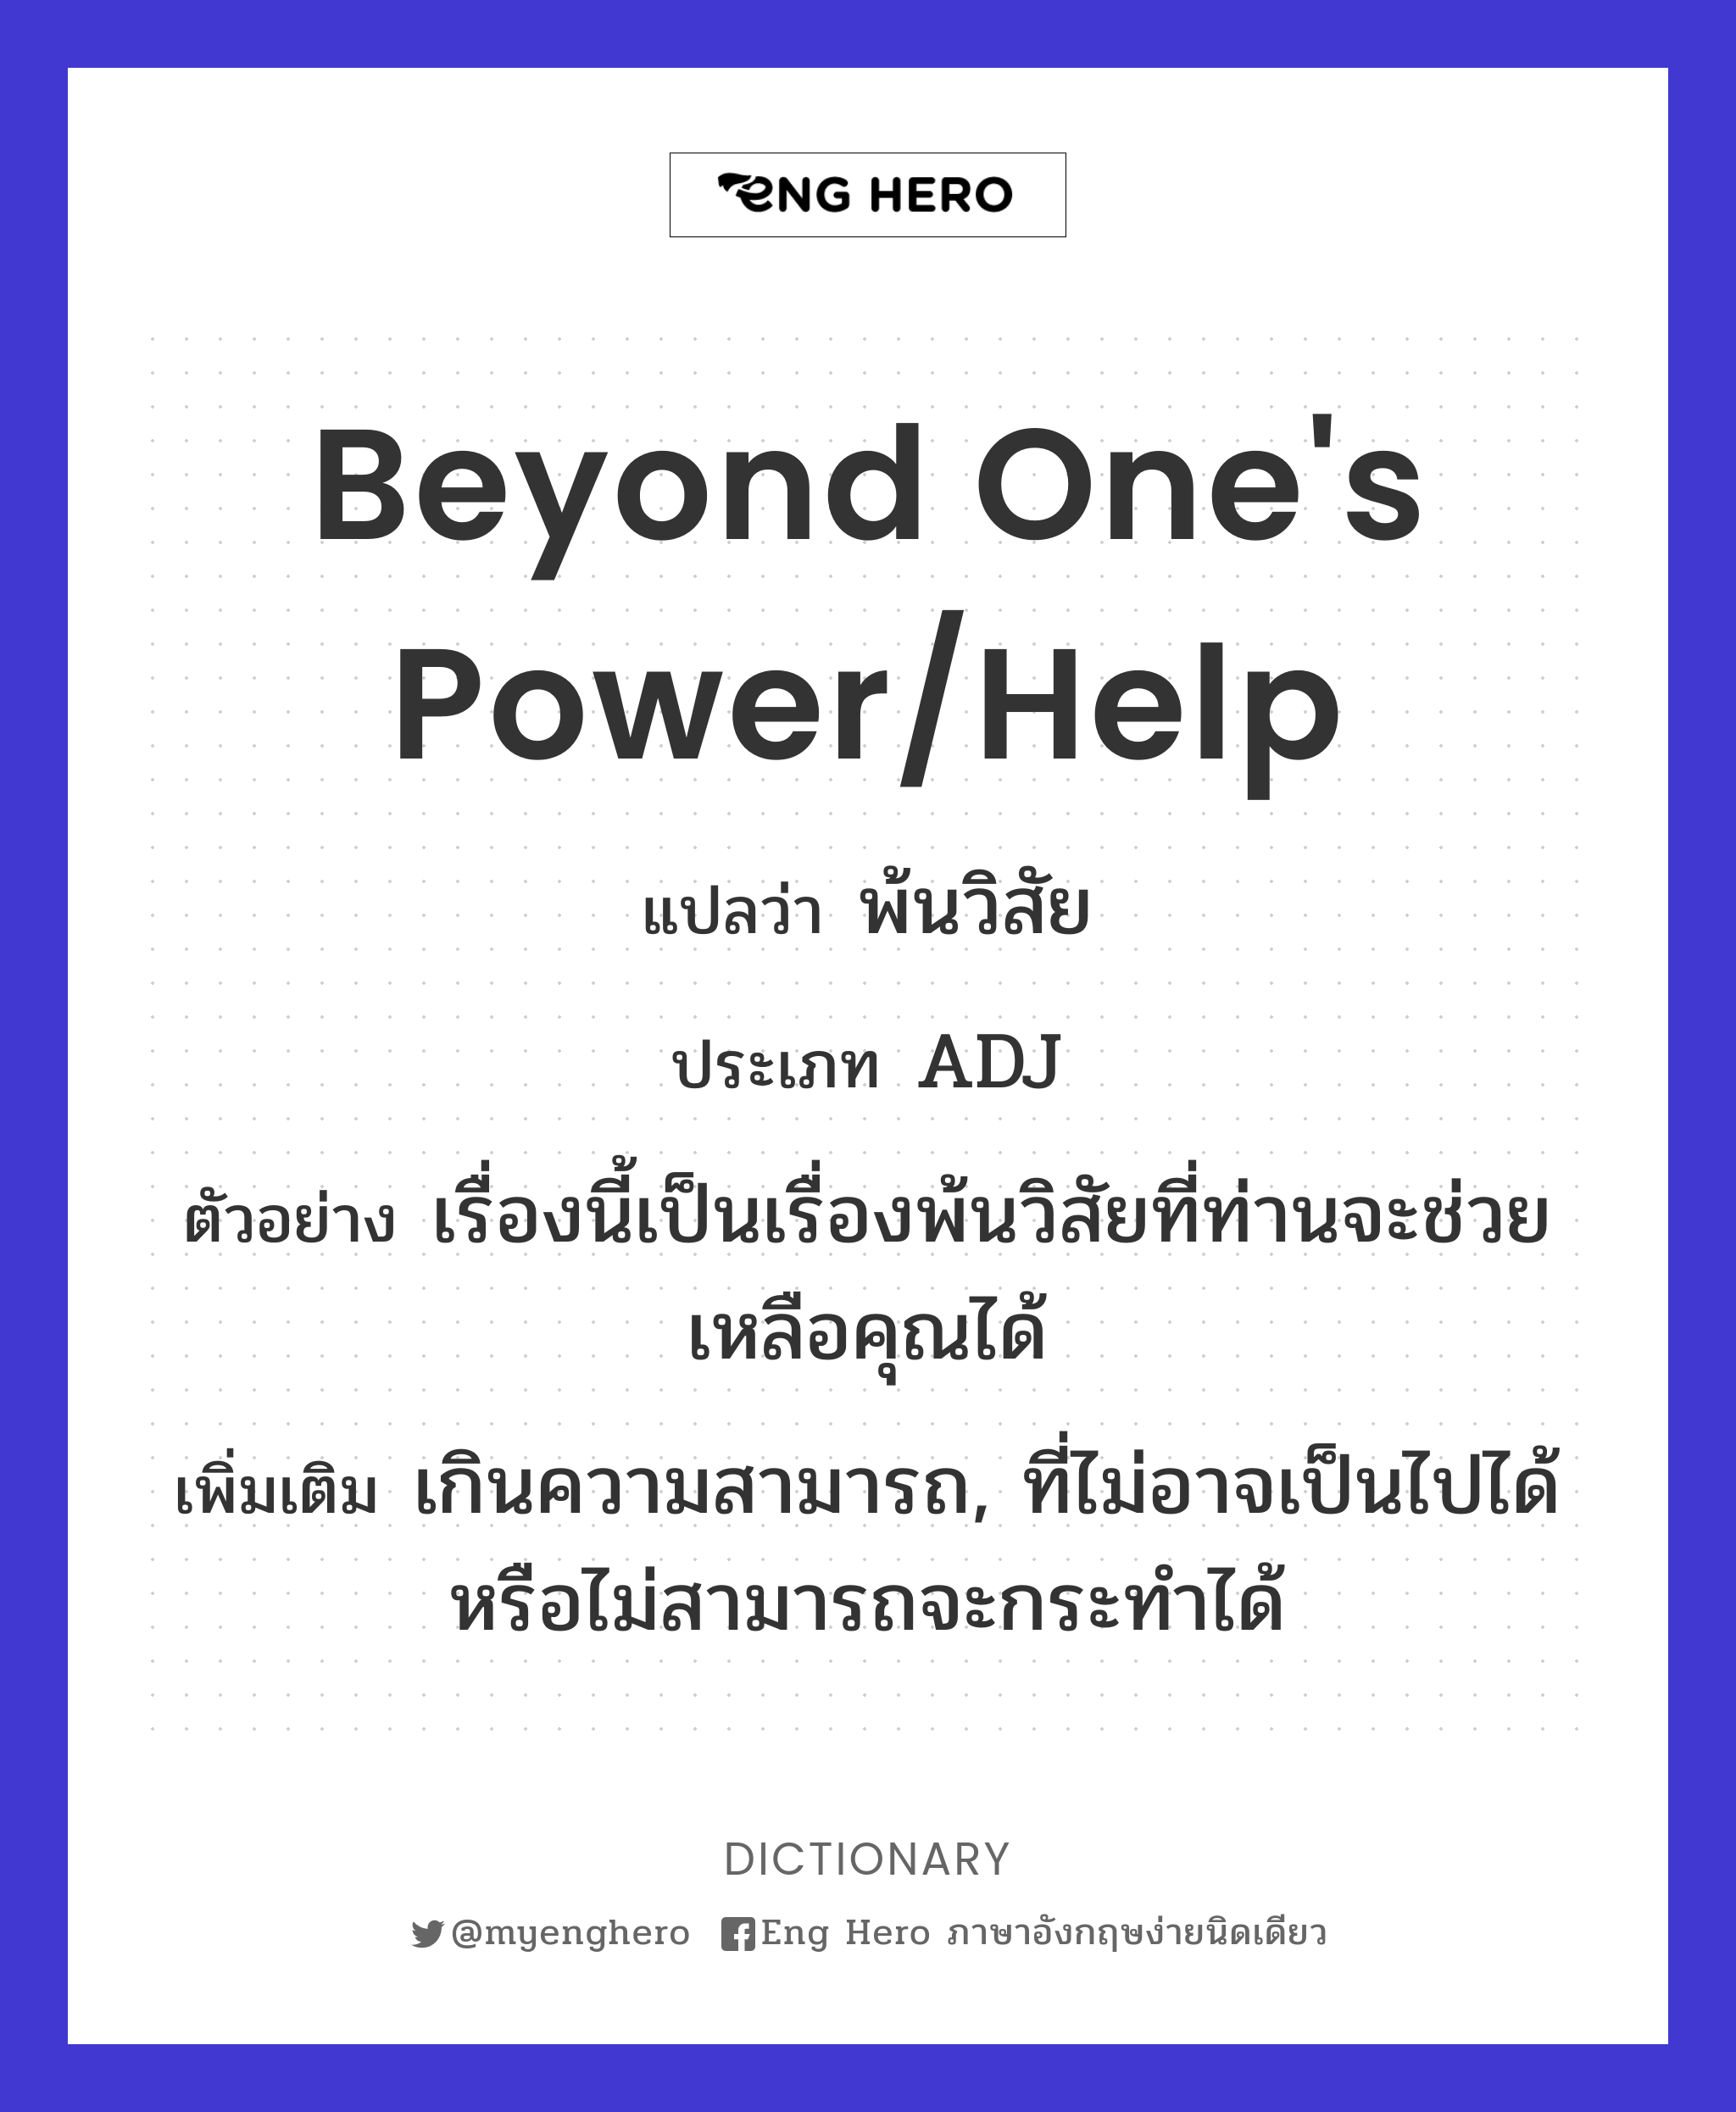 beyond one's power/help